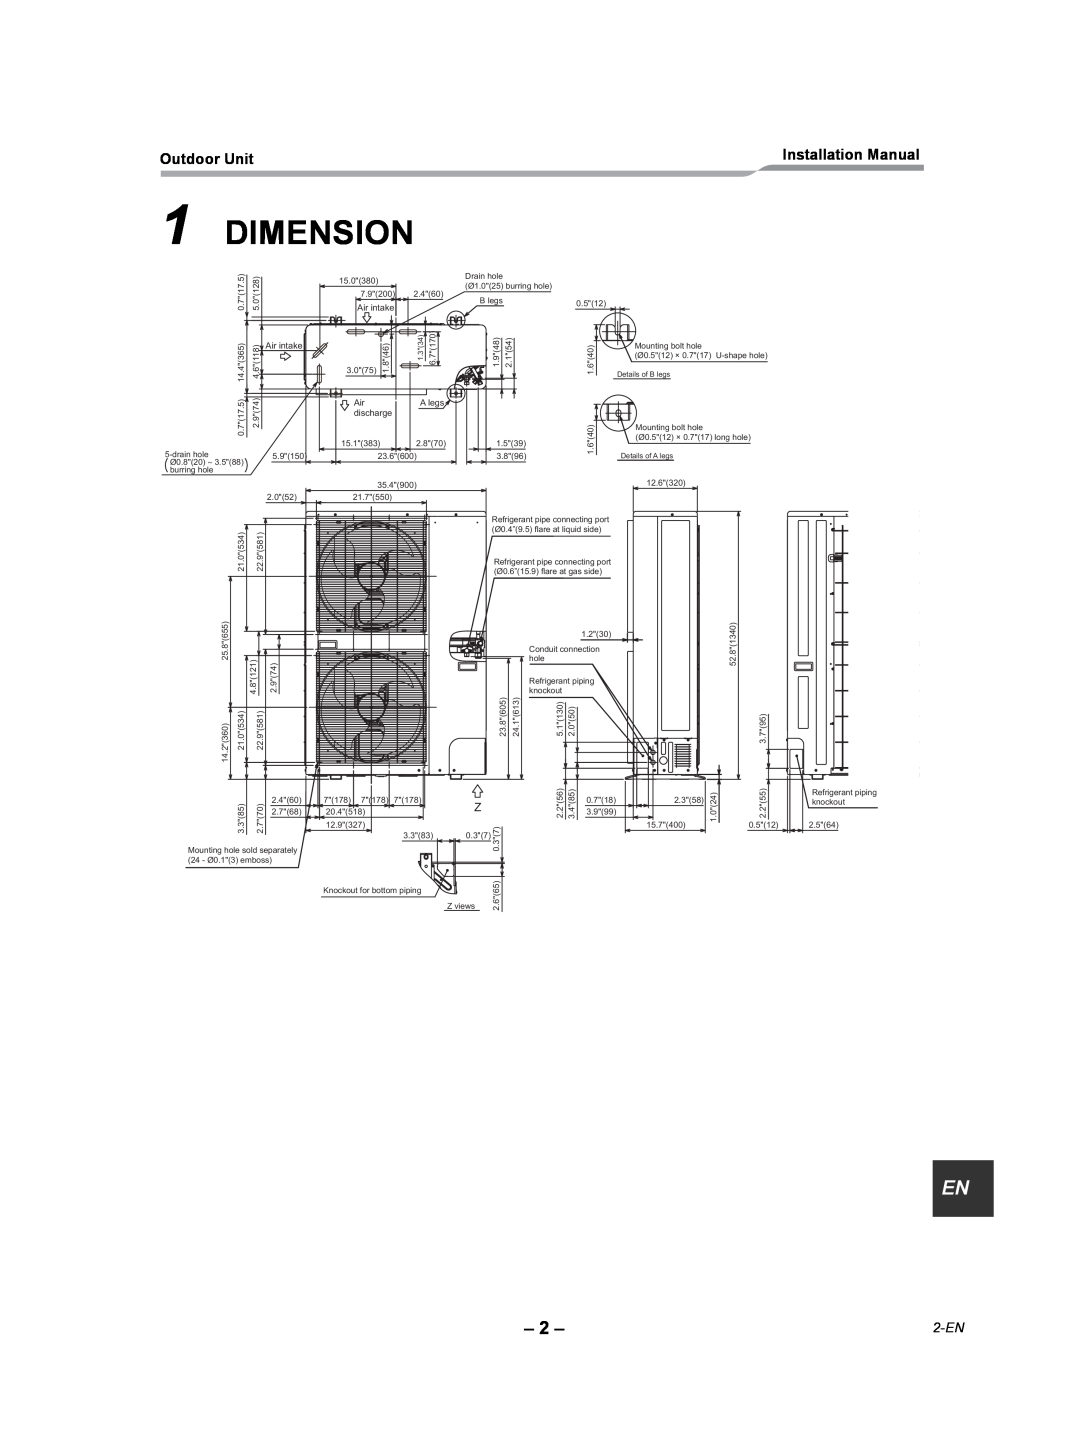 Toshiba RAV-SP360AT2-UL, RAV-SP300AT2-UL, RAV-SP420AT2-UL installation manual Dimension, 2-EN, Air intake, discharge 